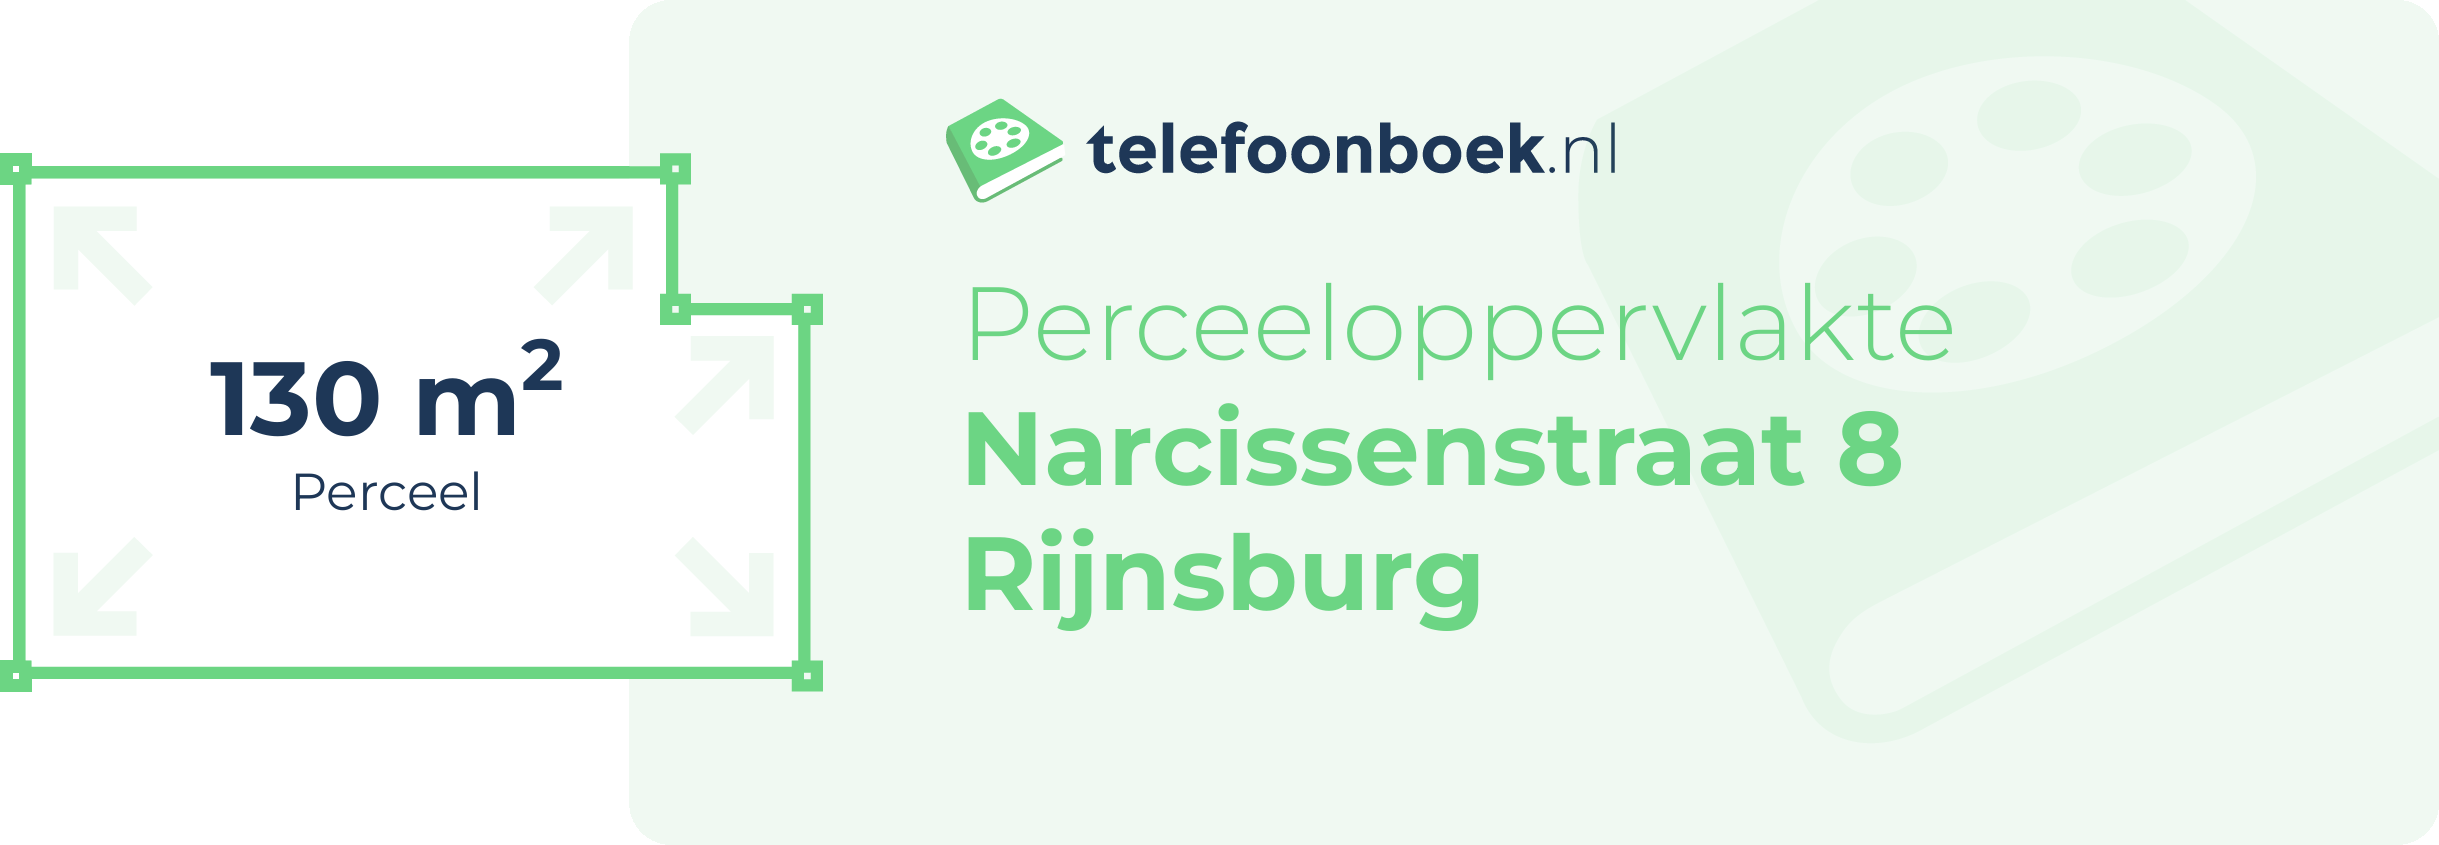 Perceeloppervlakte Narcissenstraat 8 Rijnsburg